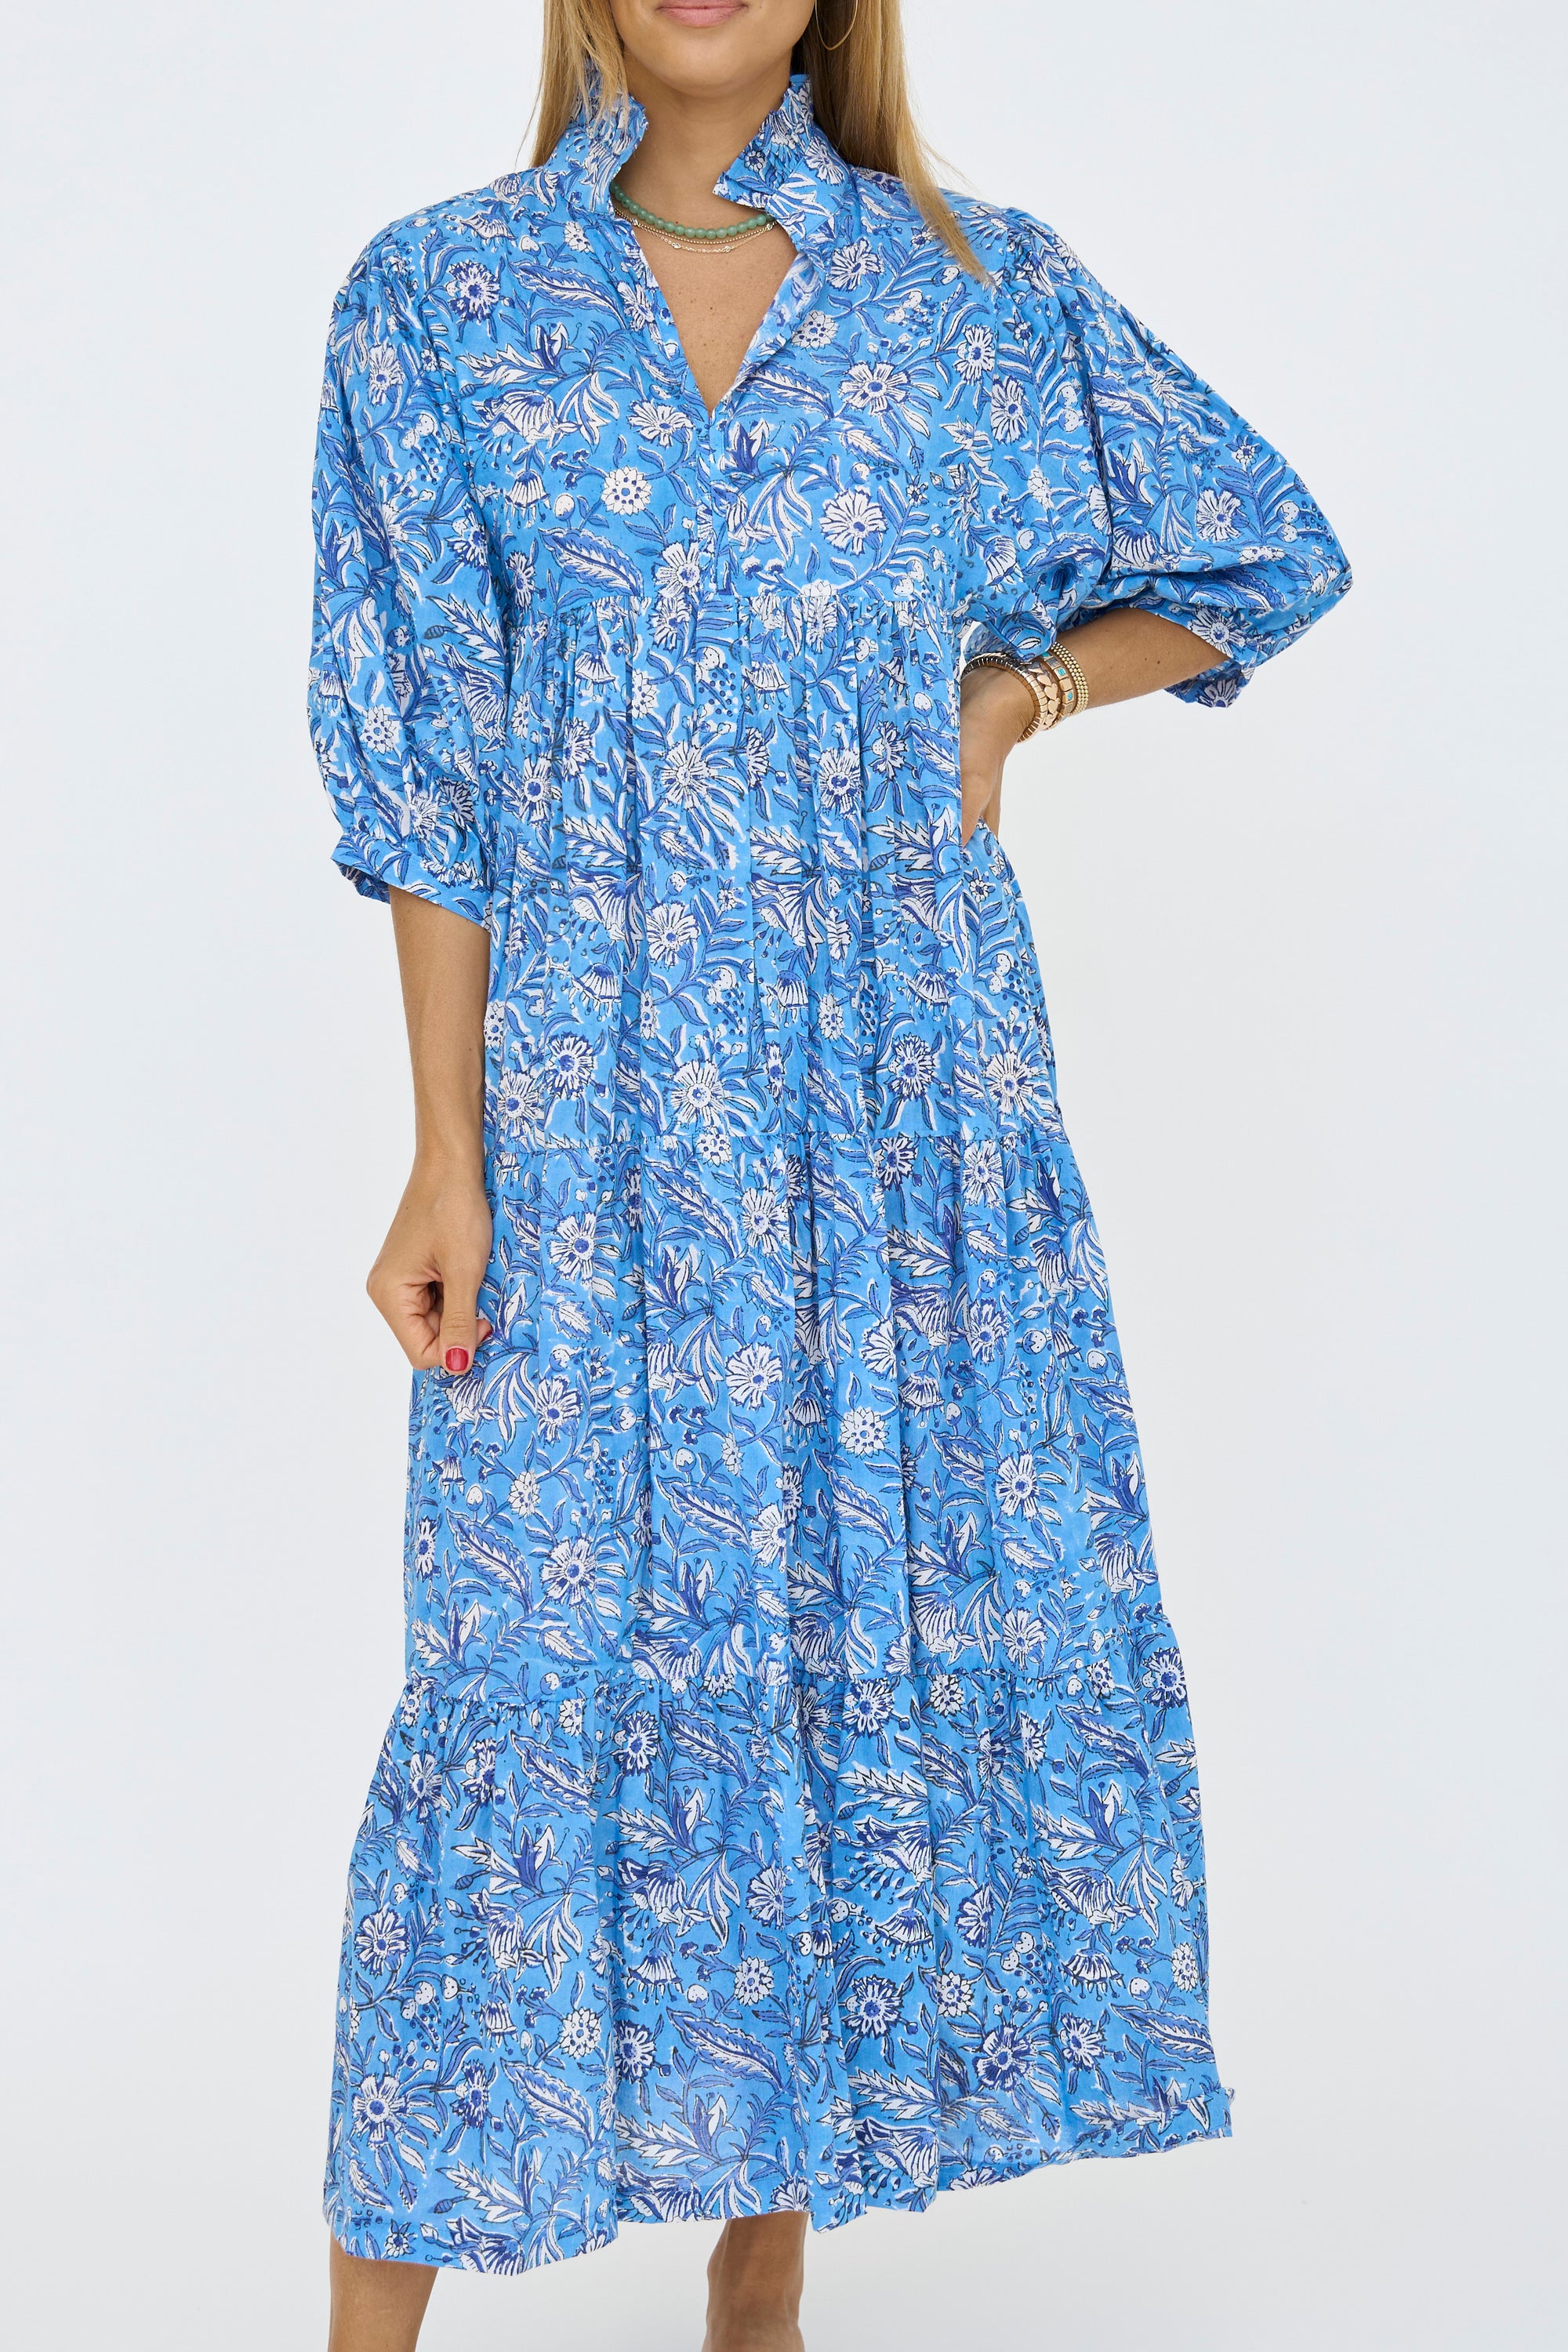 Palmetto Print Dress - Azure